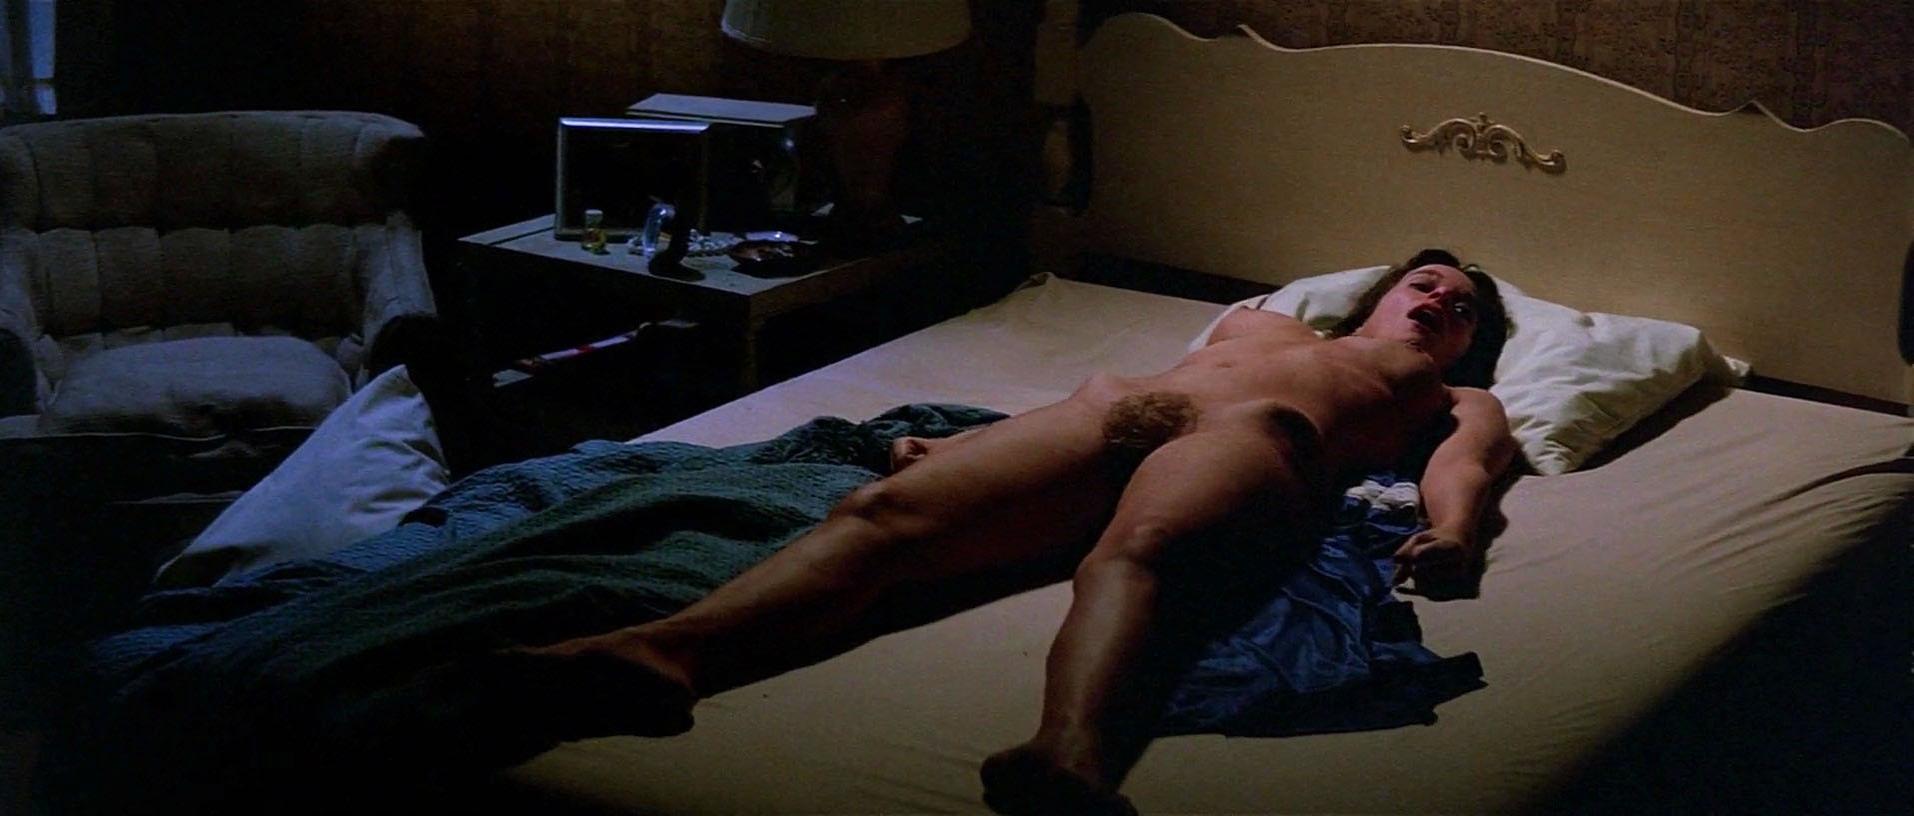 Barbara Hershey nude - The Entity (1981)